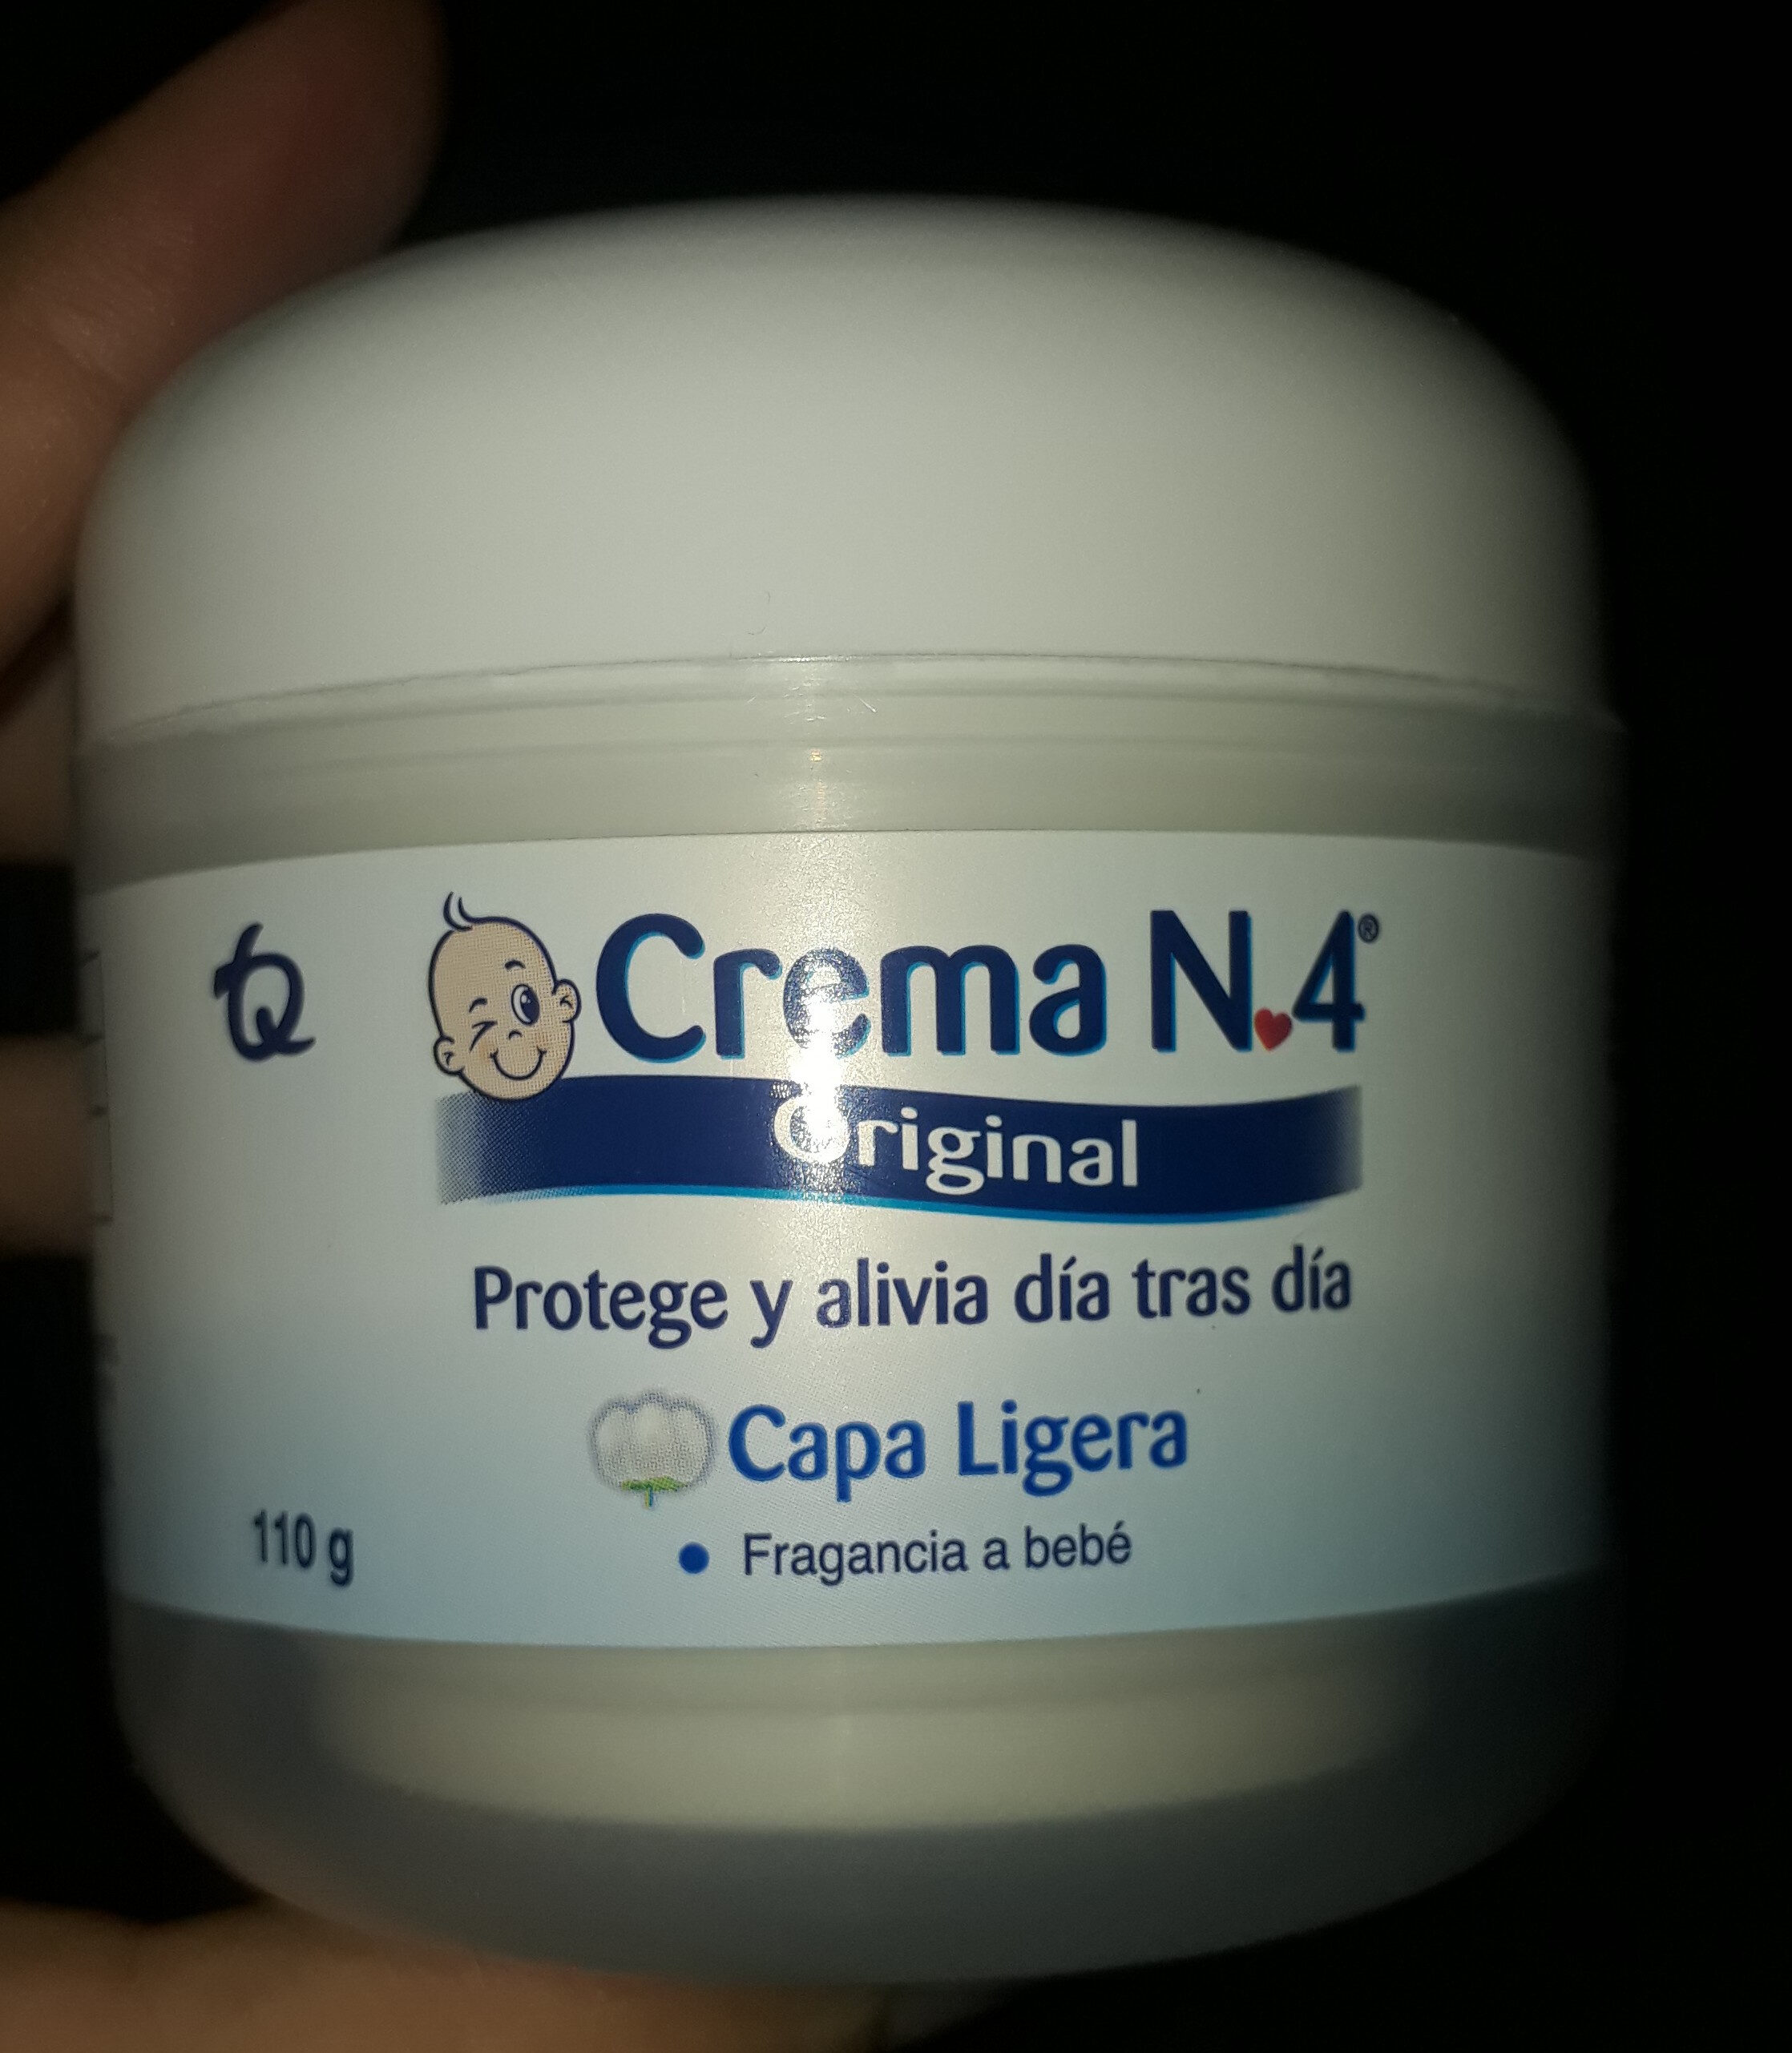 crema n. 4° - Product - es